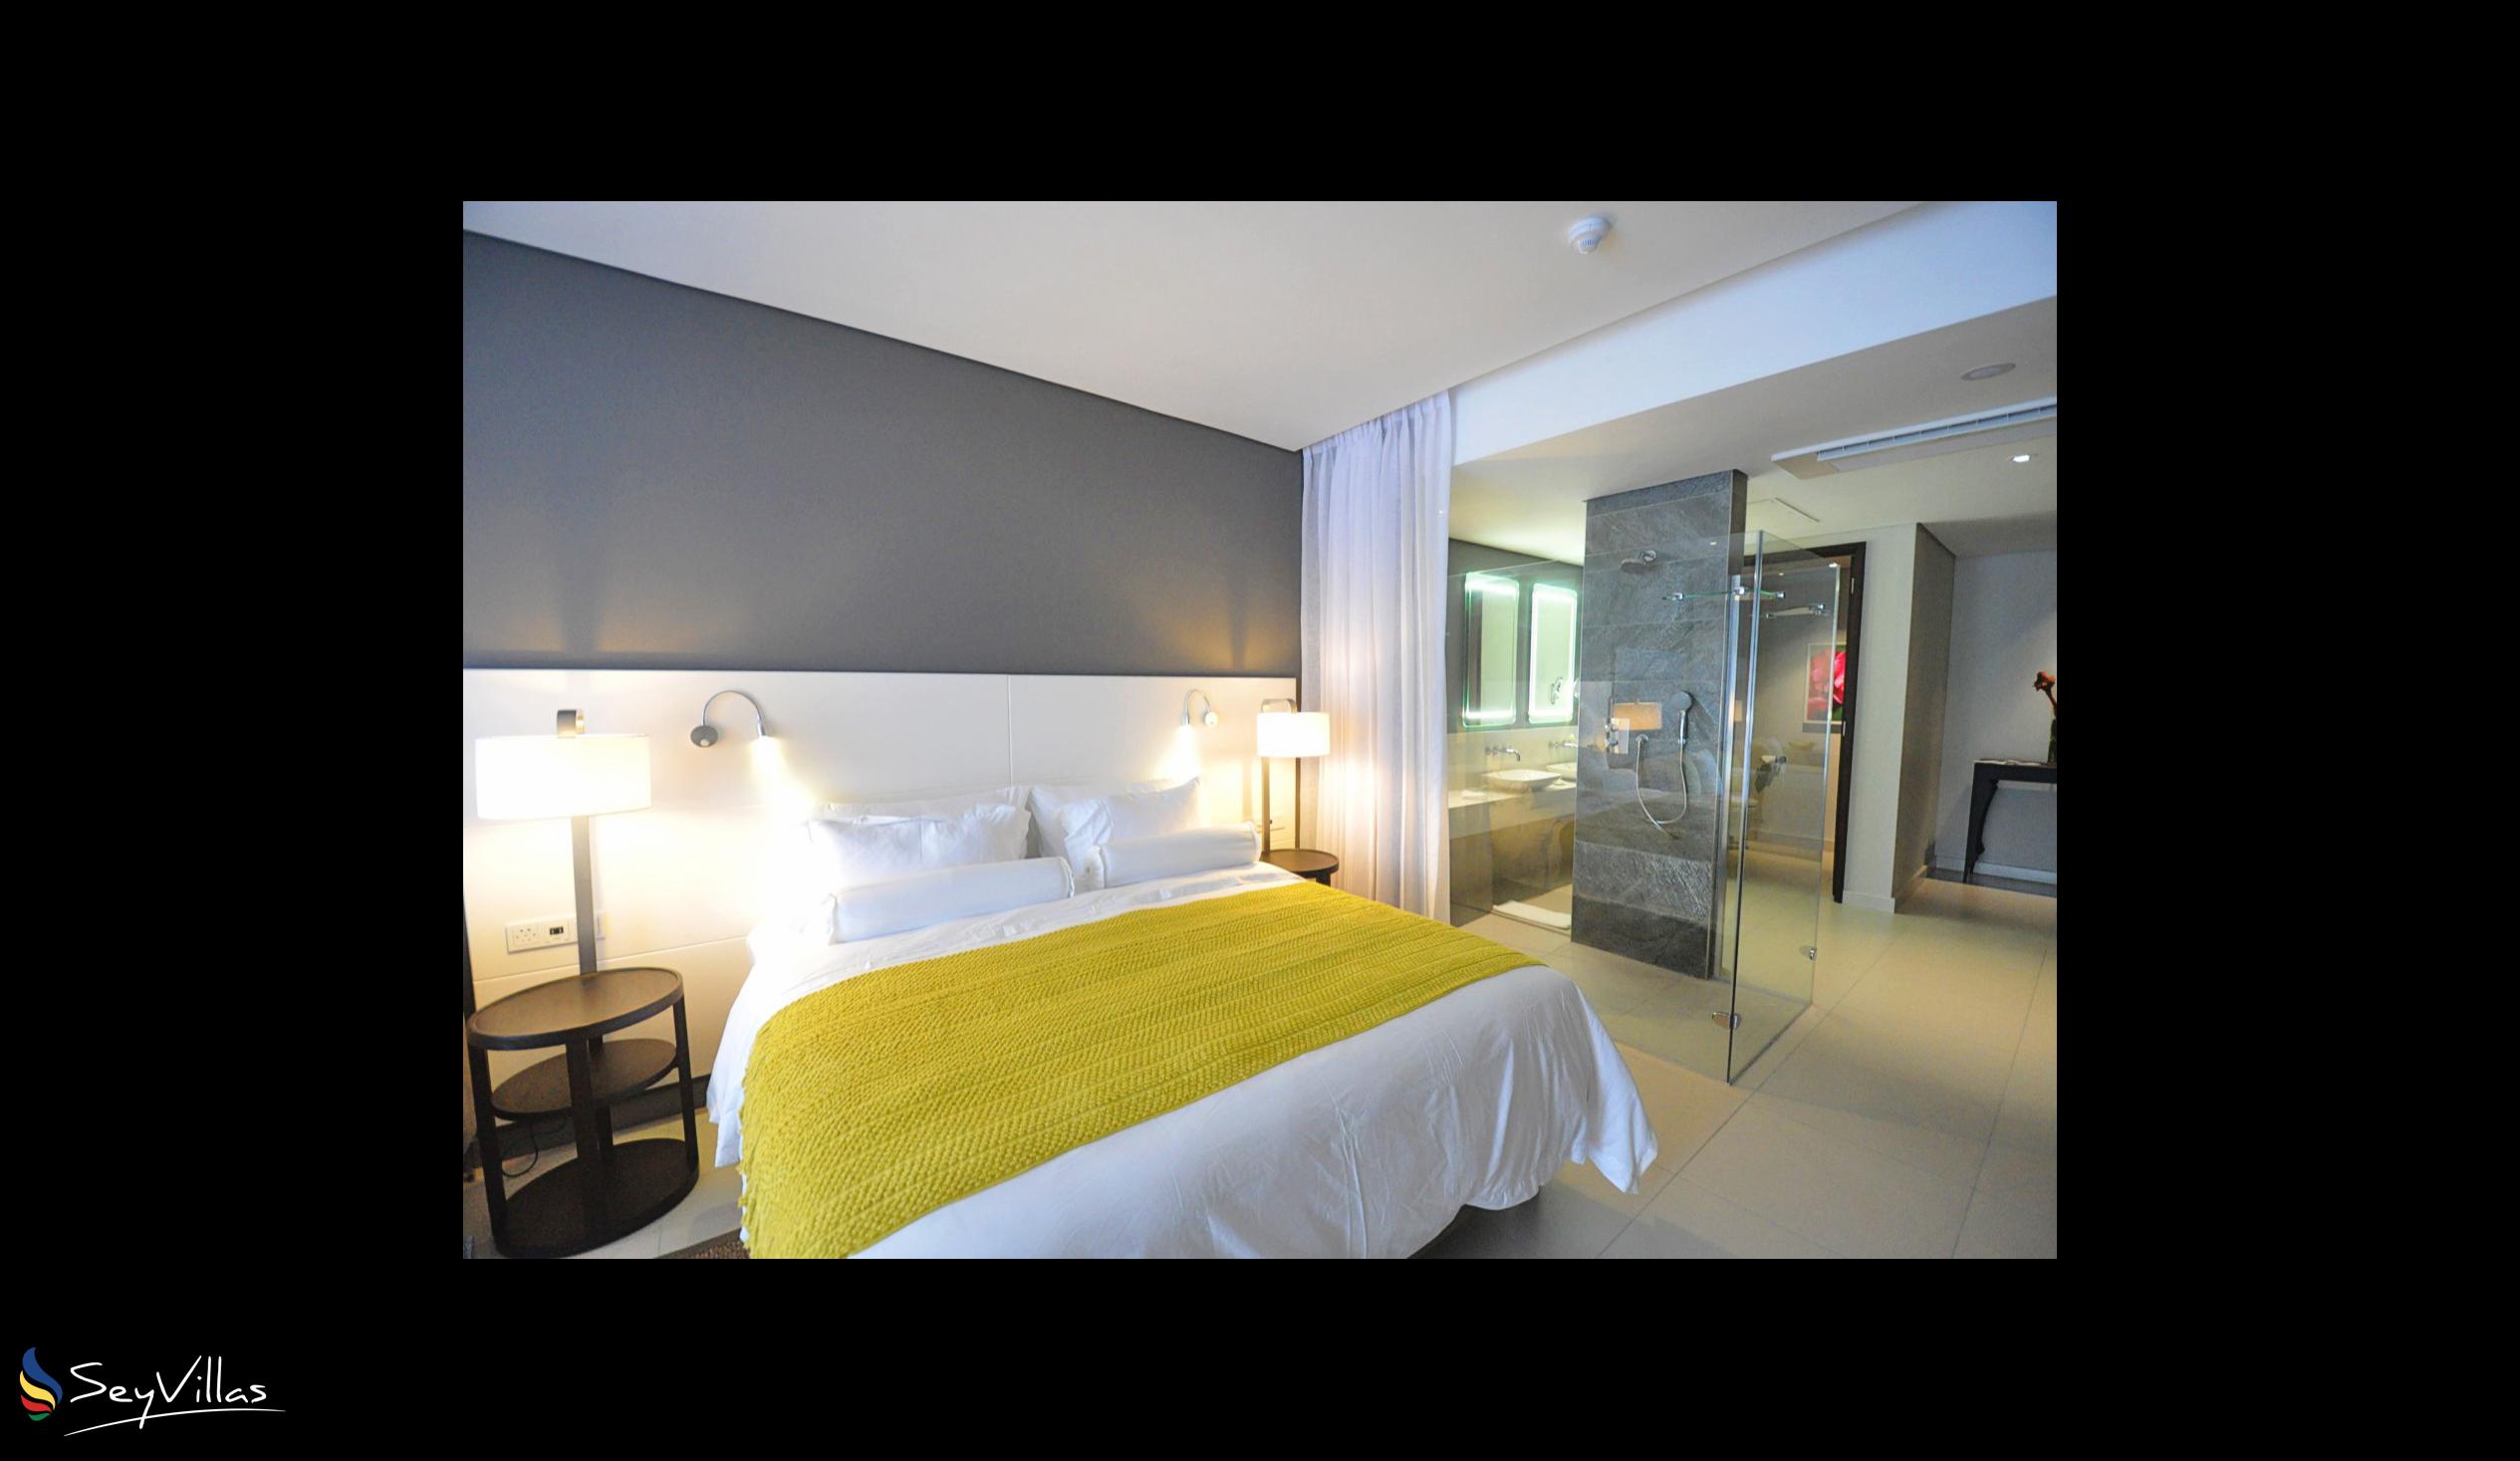 Photo 73: Eden Bleu Hotel - Luxury Suite with Marina View - Mahé (Seychelles)